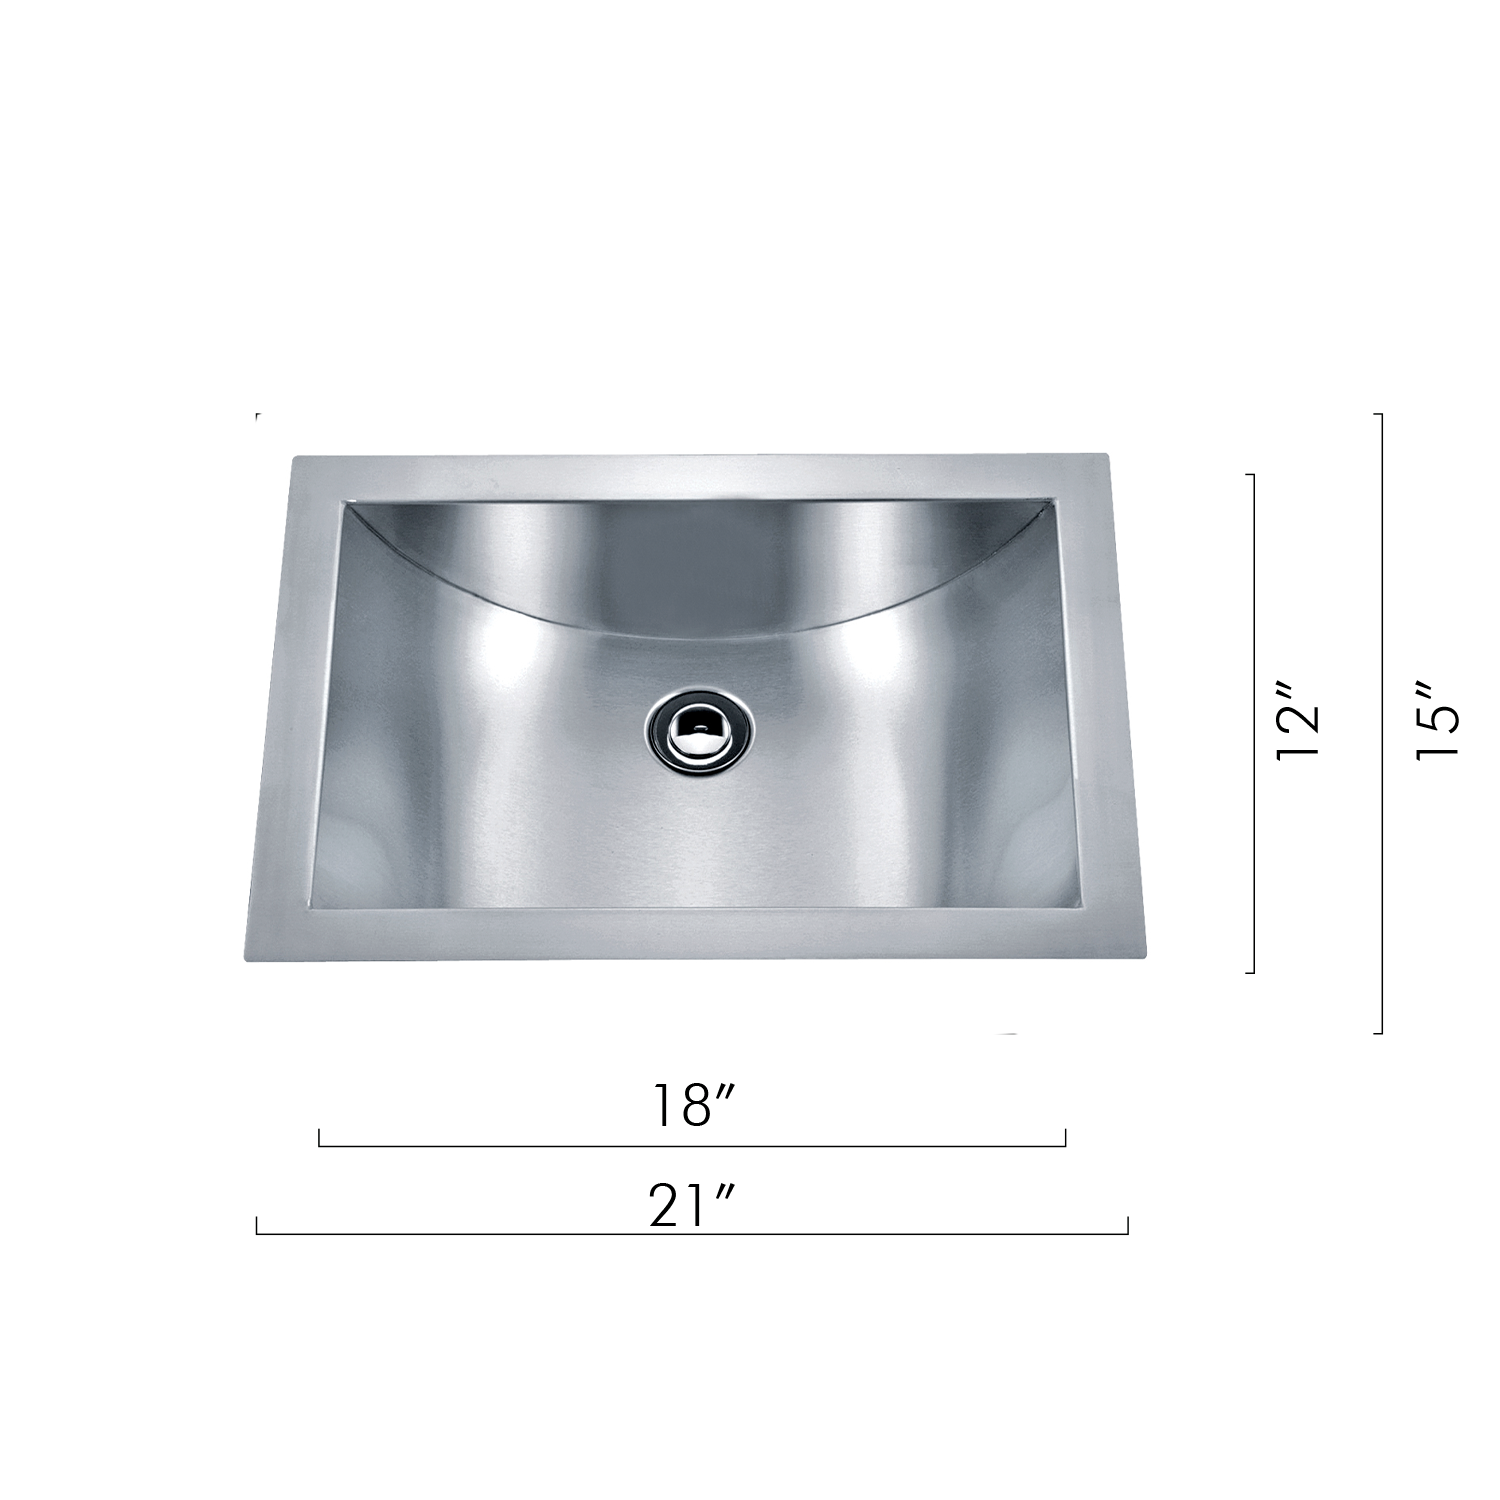 DAX Handmade Single Bowl Undermount Kitchen Sink, 18 Gauge Stainless Steel, Brushed Finish, 21 x 15 x 6 Inches (DAX-SQ-114)